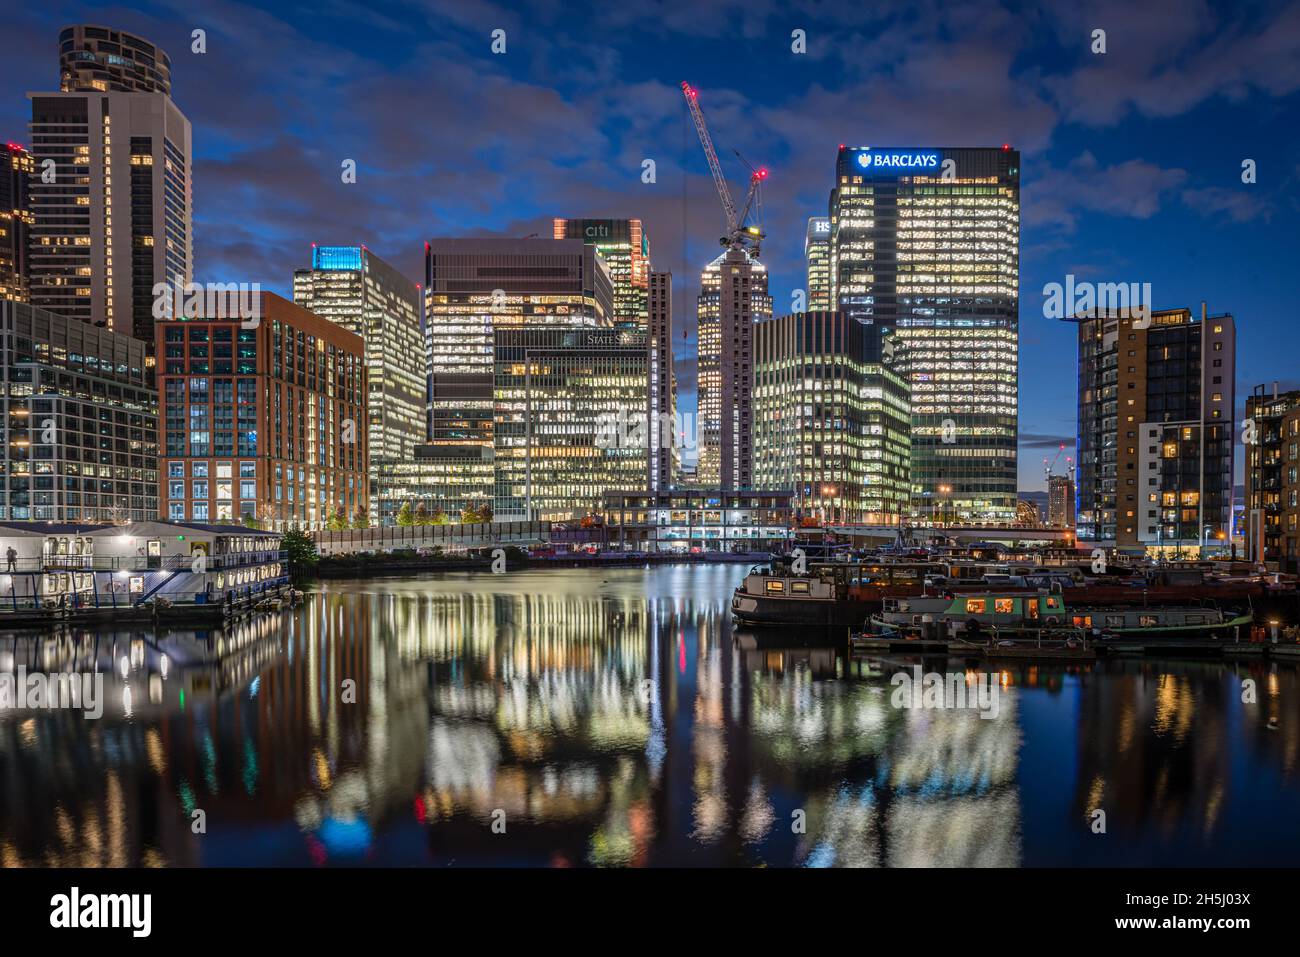 Canary Wharf at night, London, UK Stock Photo